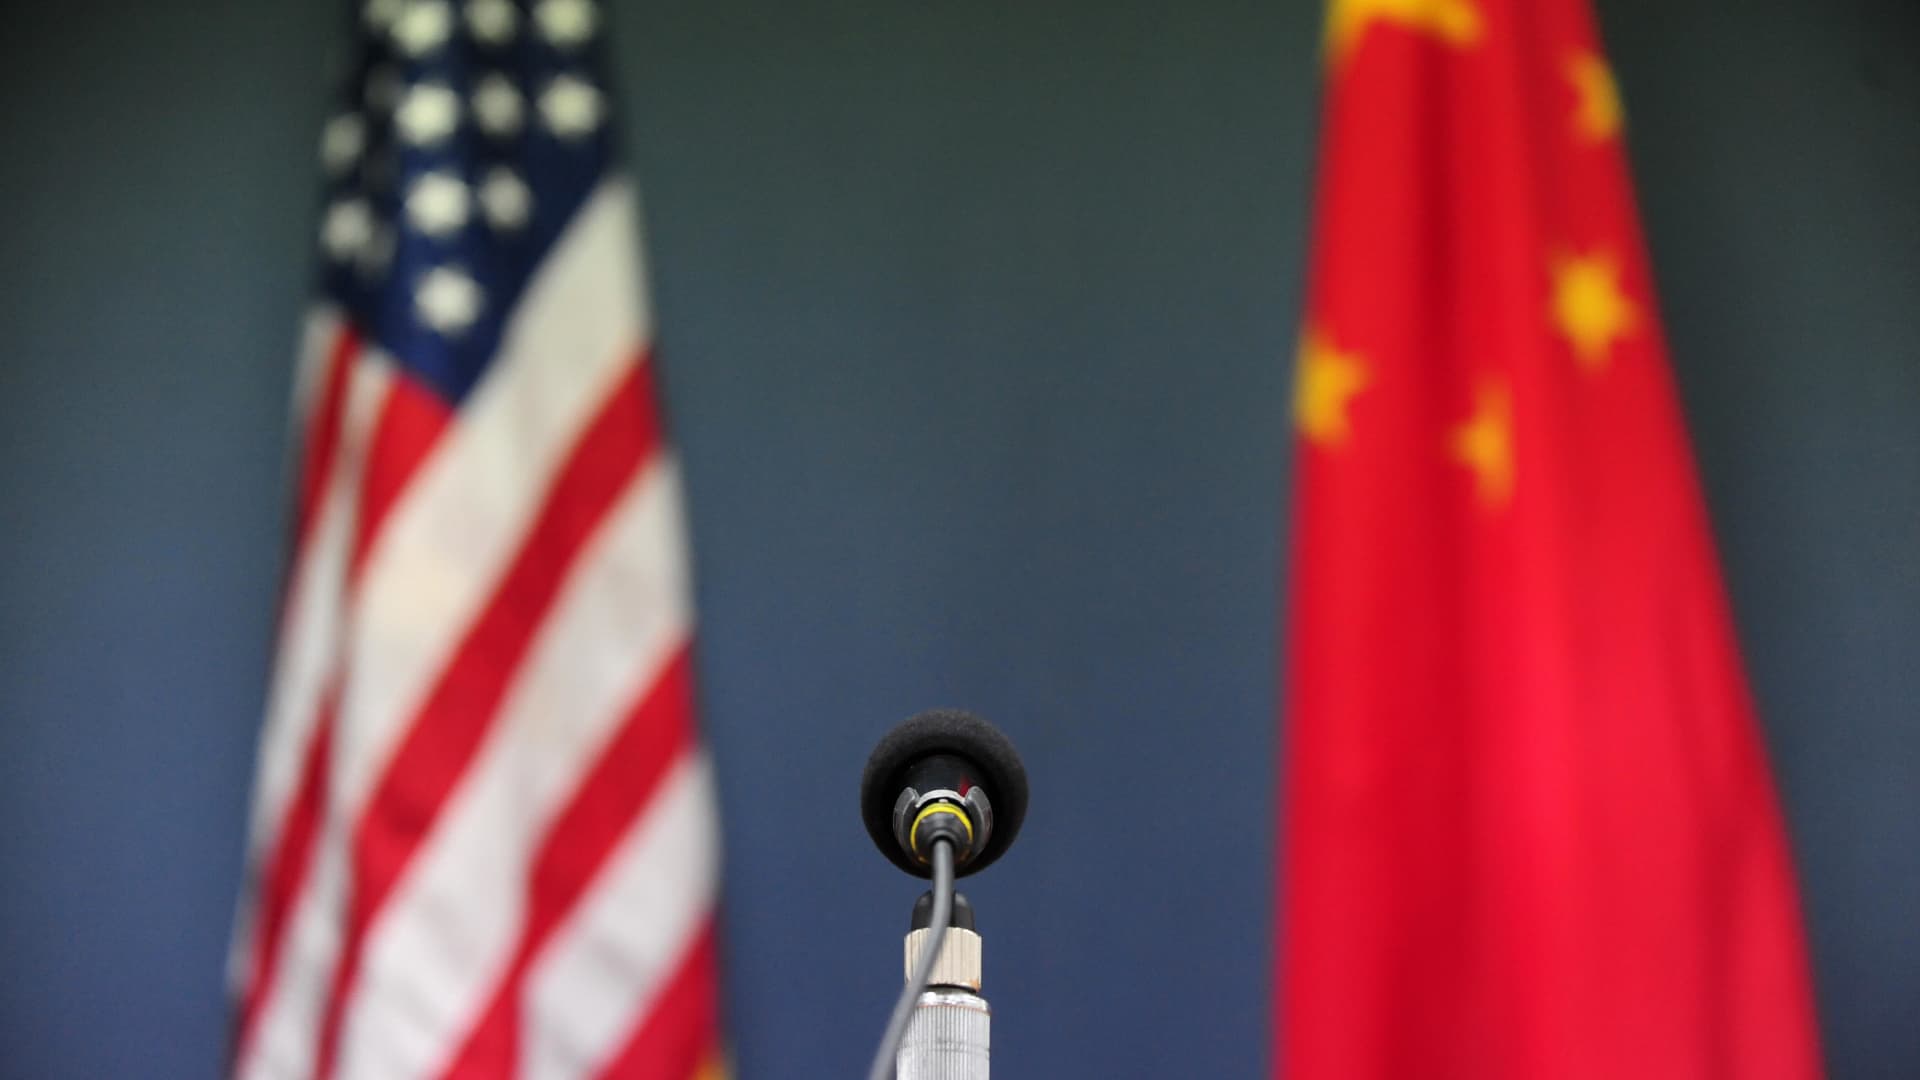 U.S., China’s top commerce officials meet to discuss trade concerns